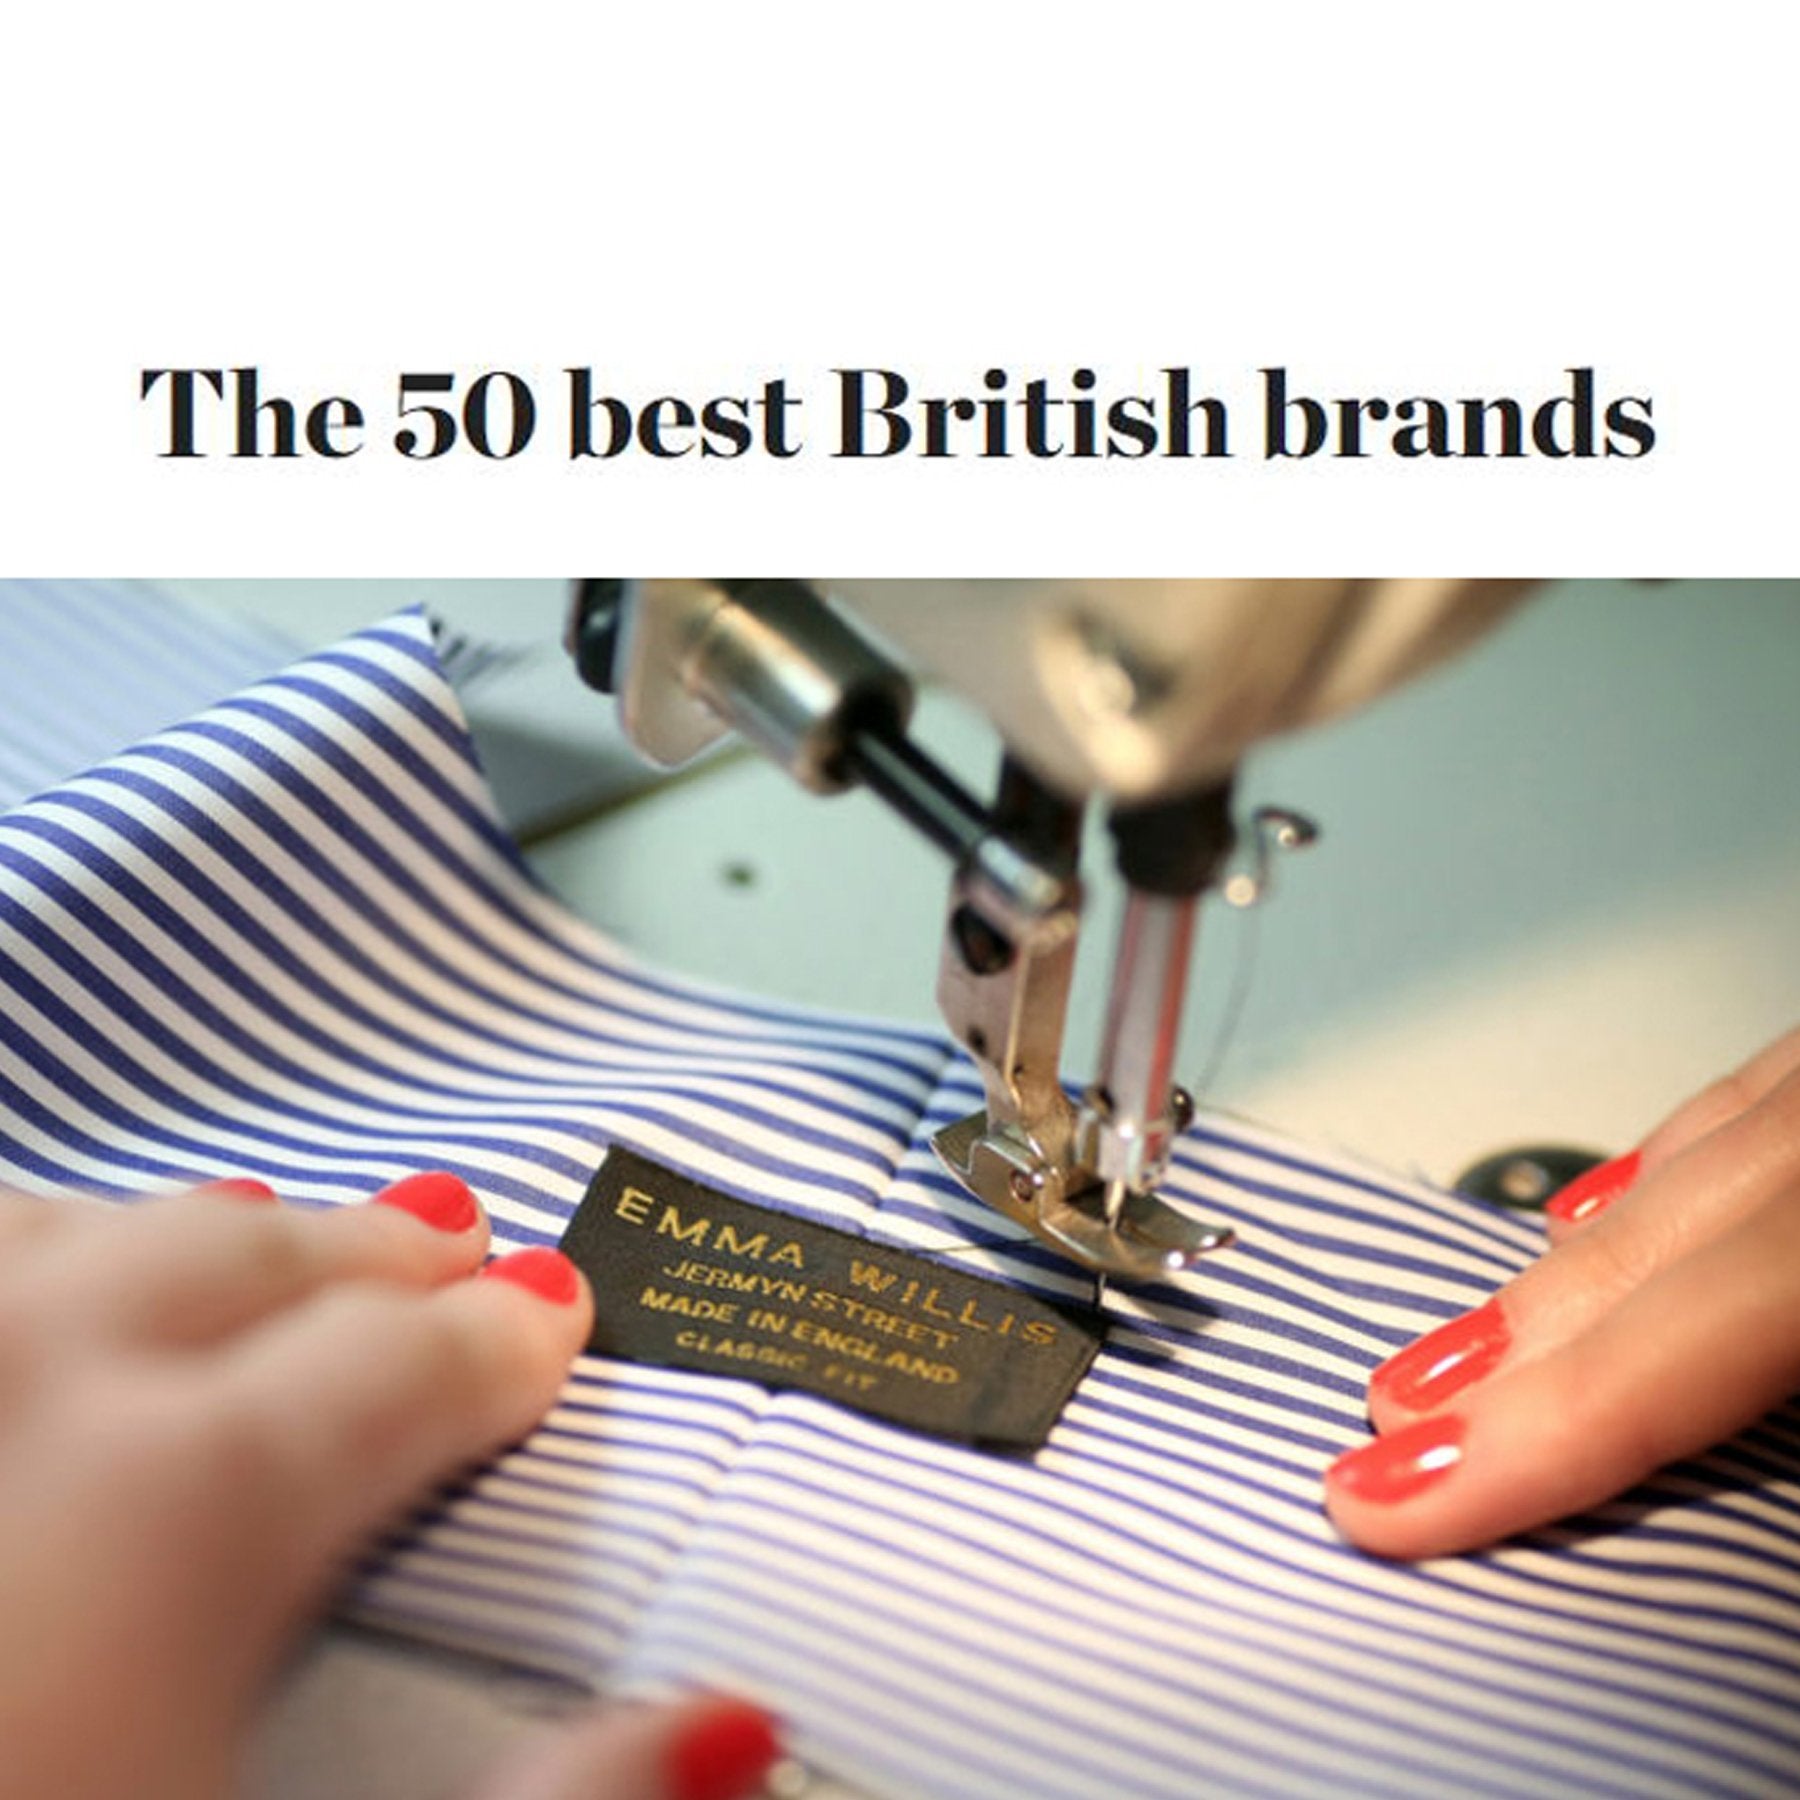 Emma Willis in Gentleman’s Journal 50 Best British Brands - Emma Willis